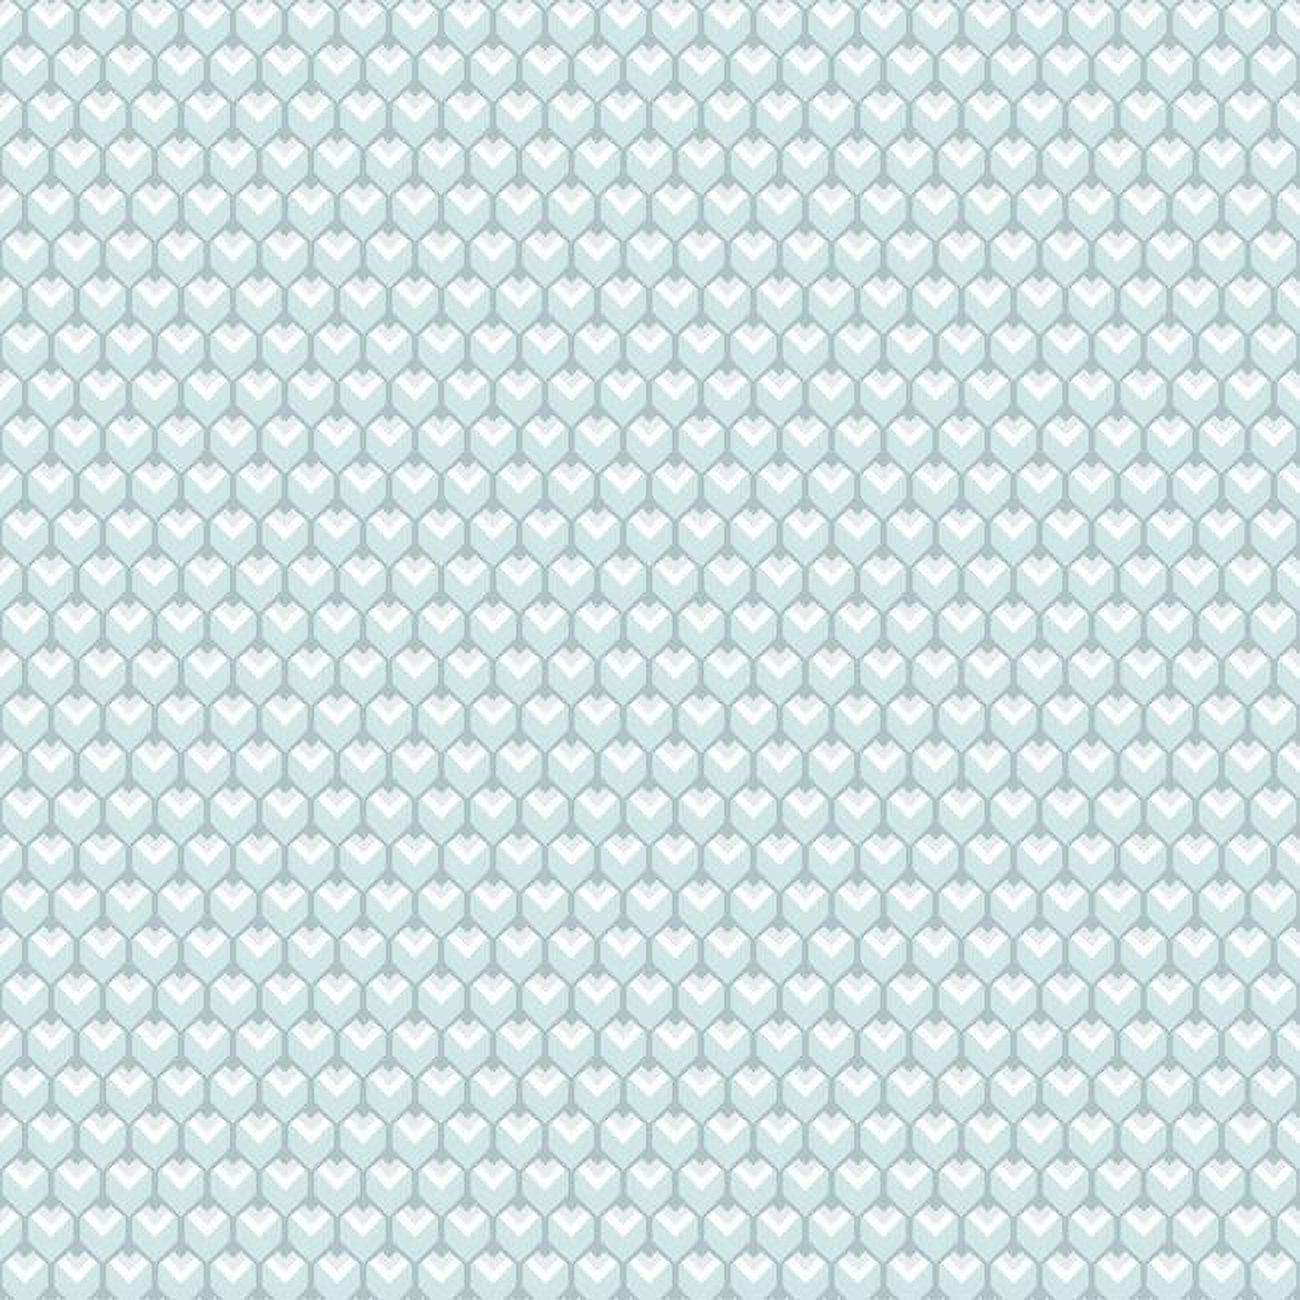 3D Petite Hexagons Peel and Stick Wallpaper - image 3 of 22